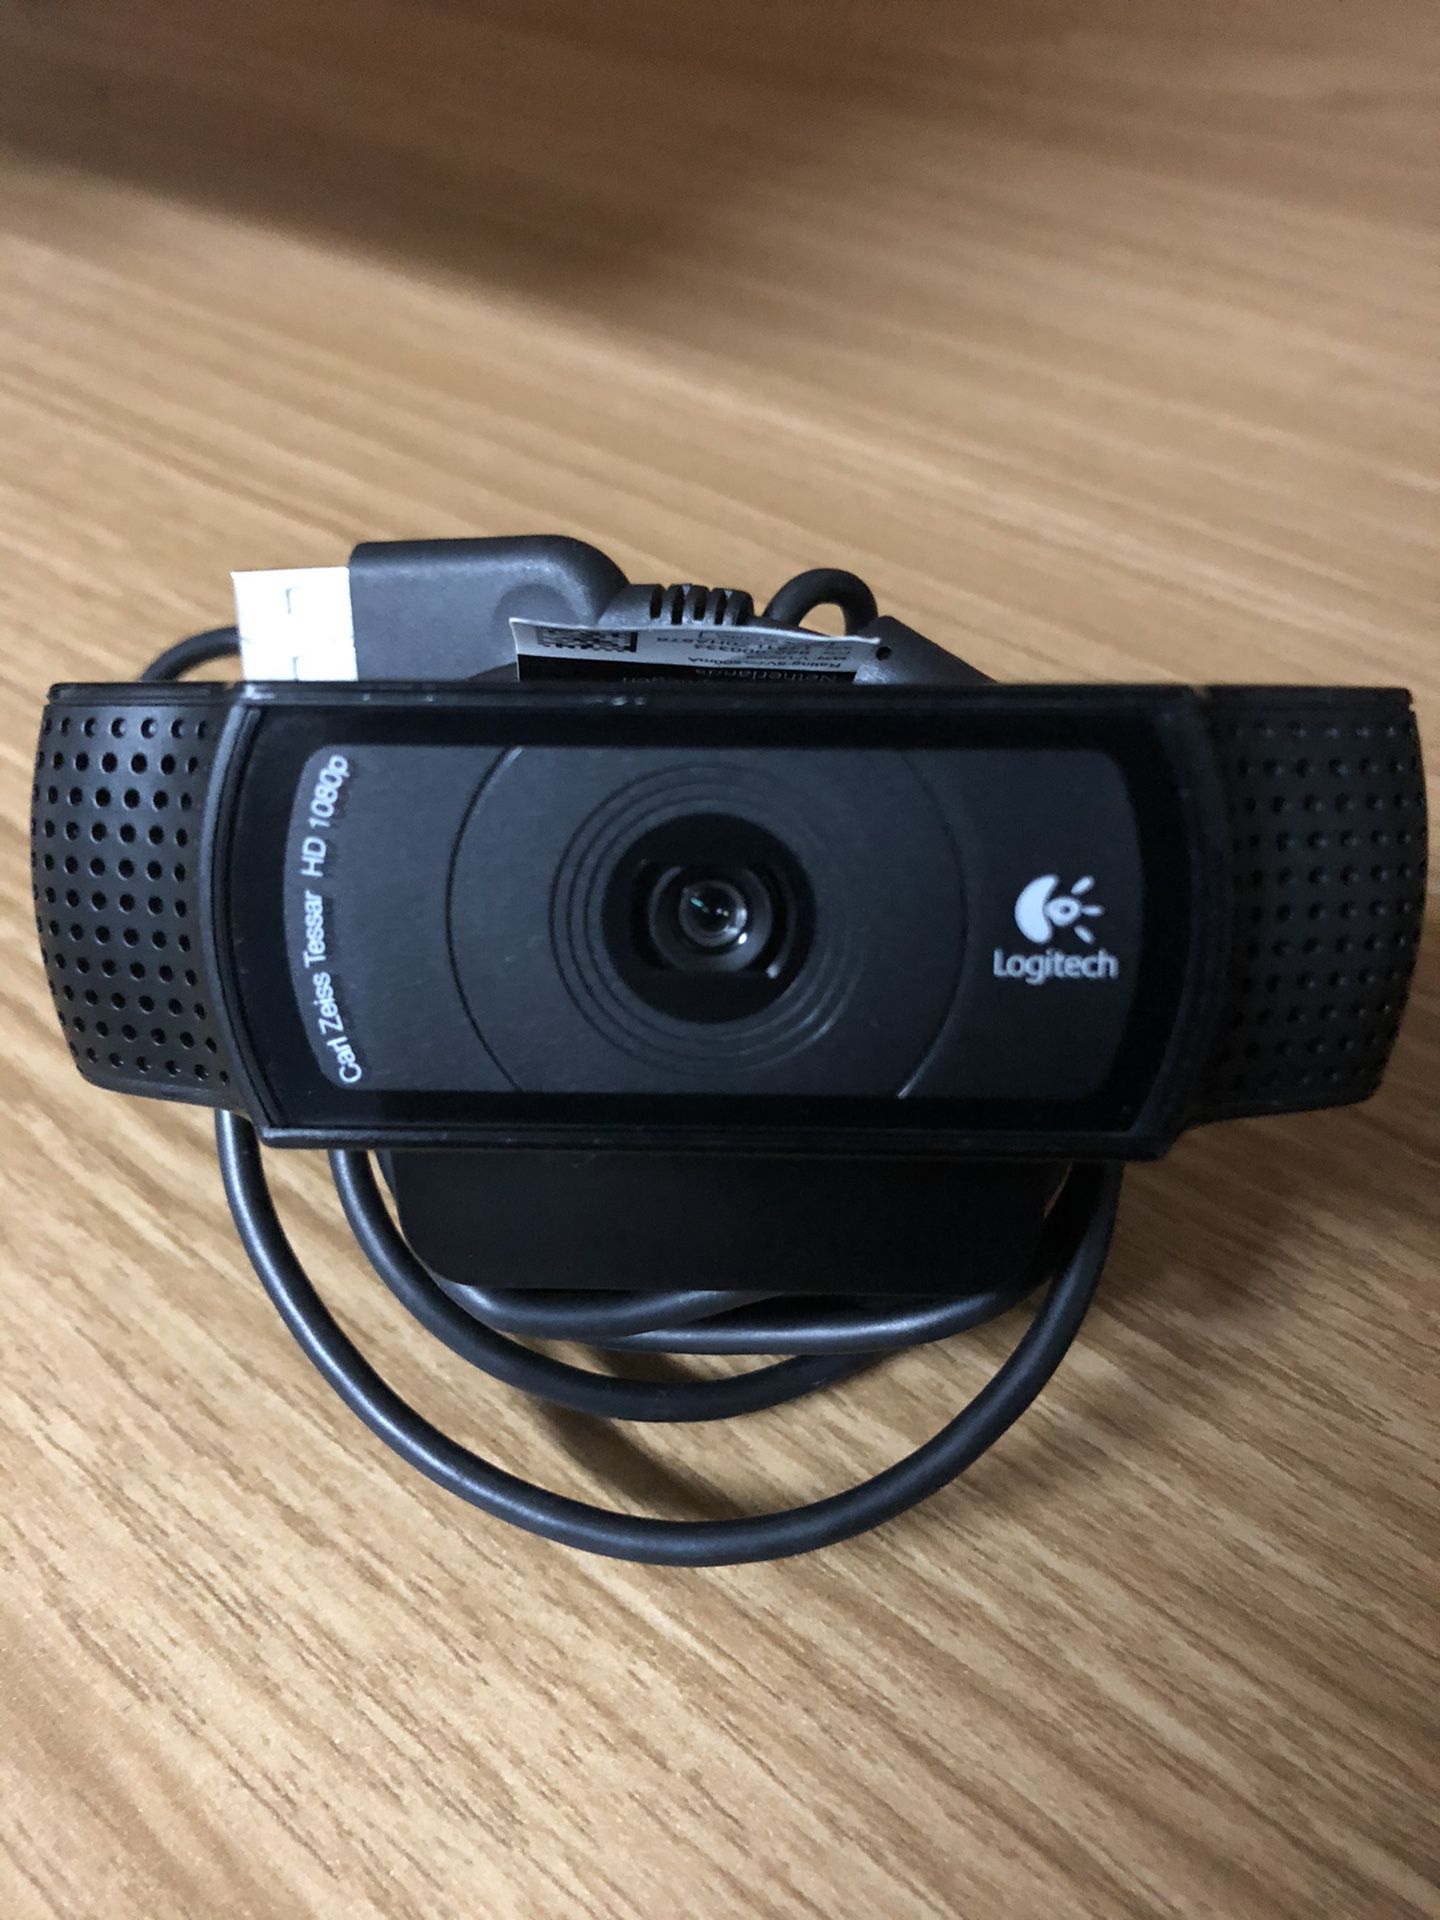 Logitech C920 high definition USB webcam